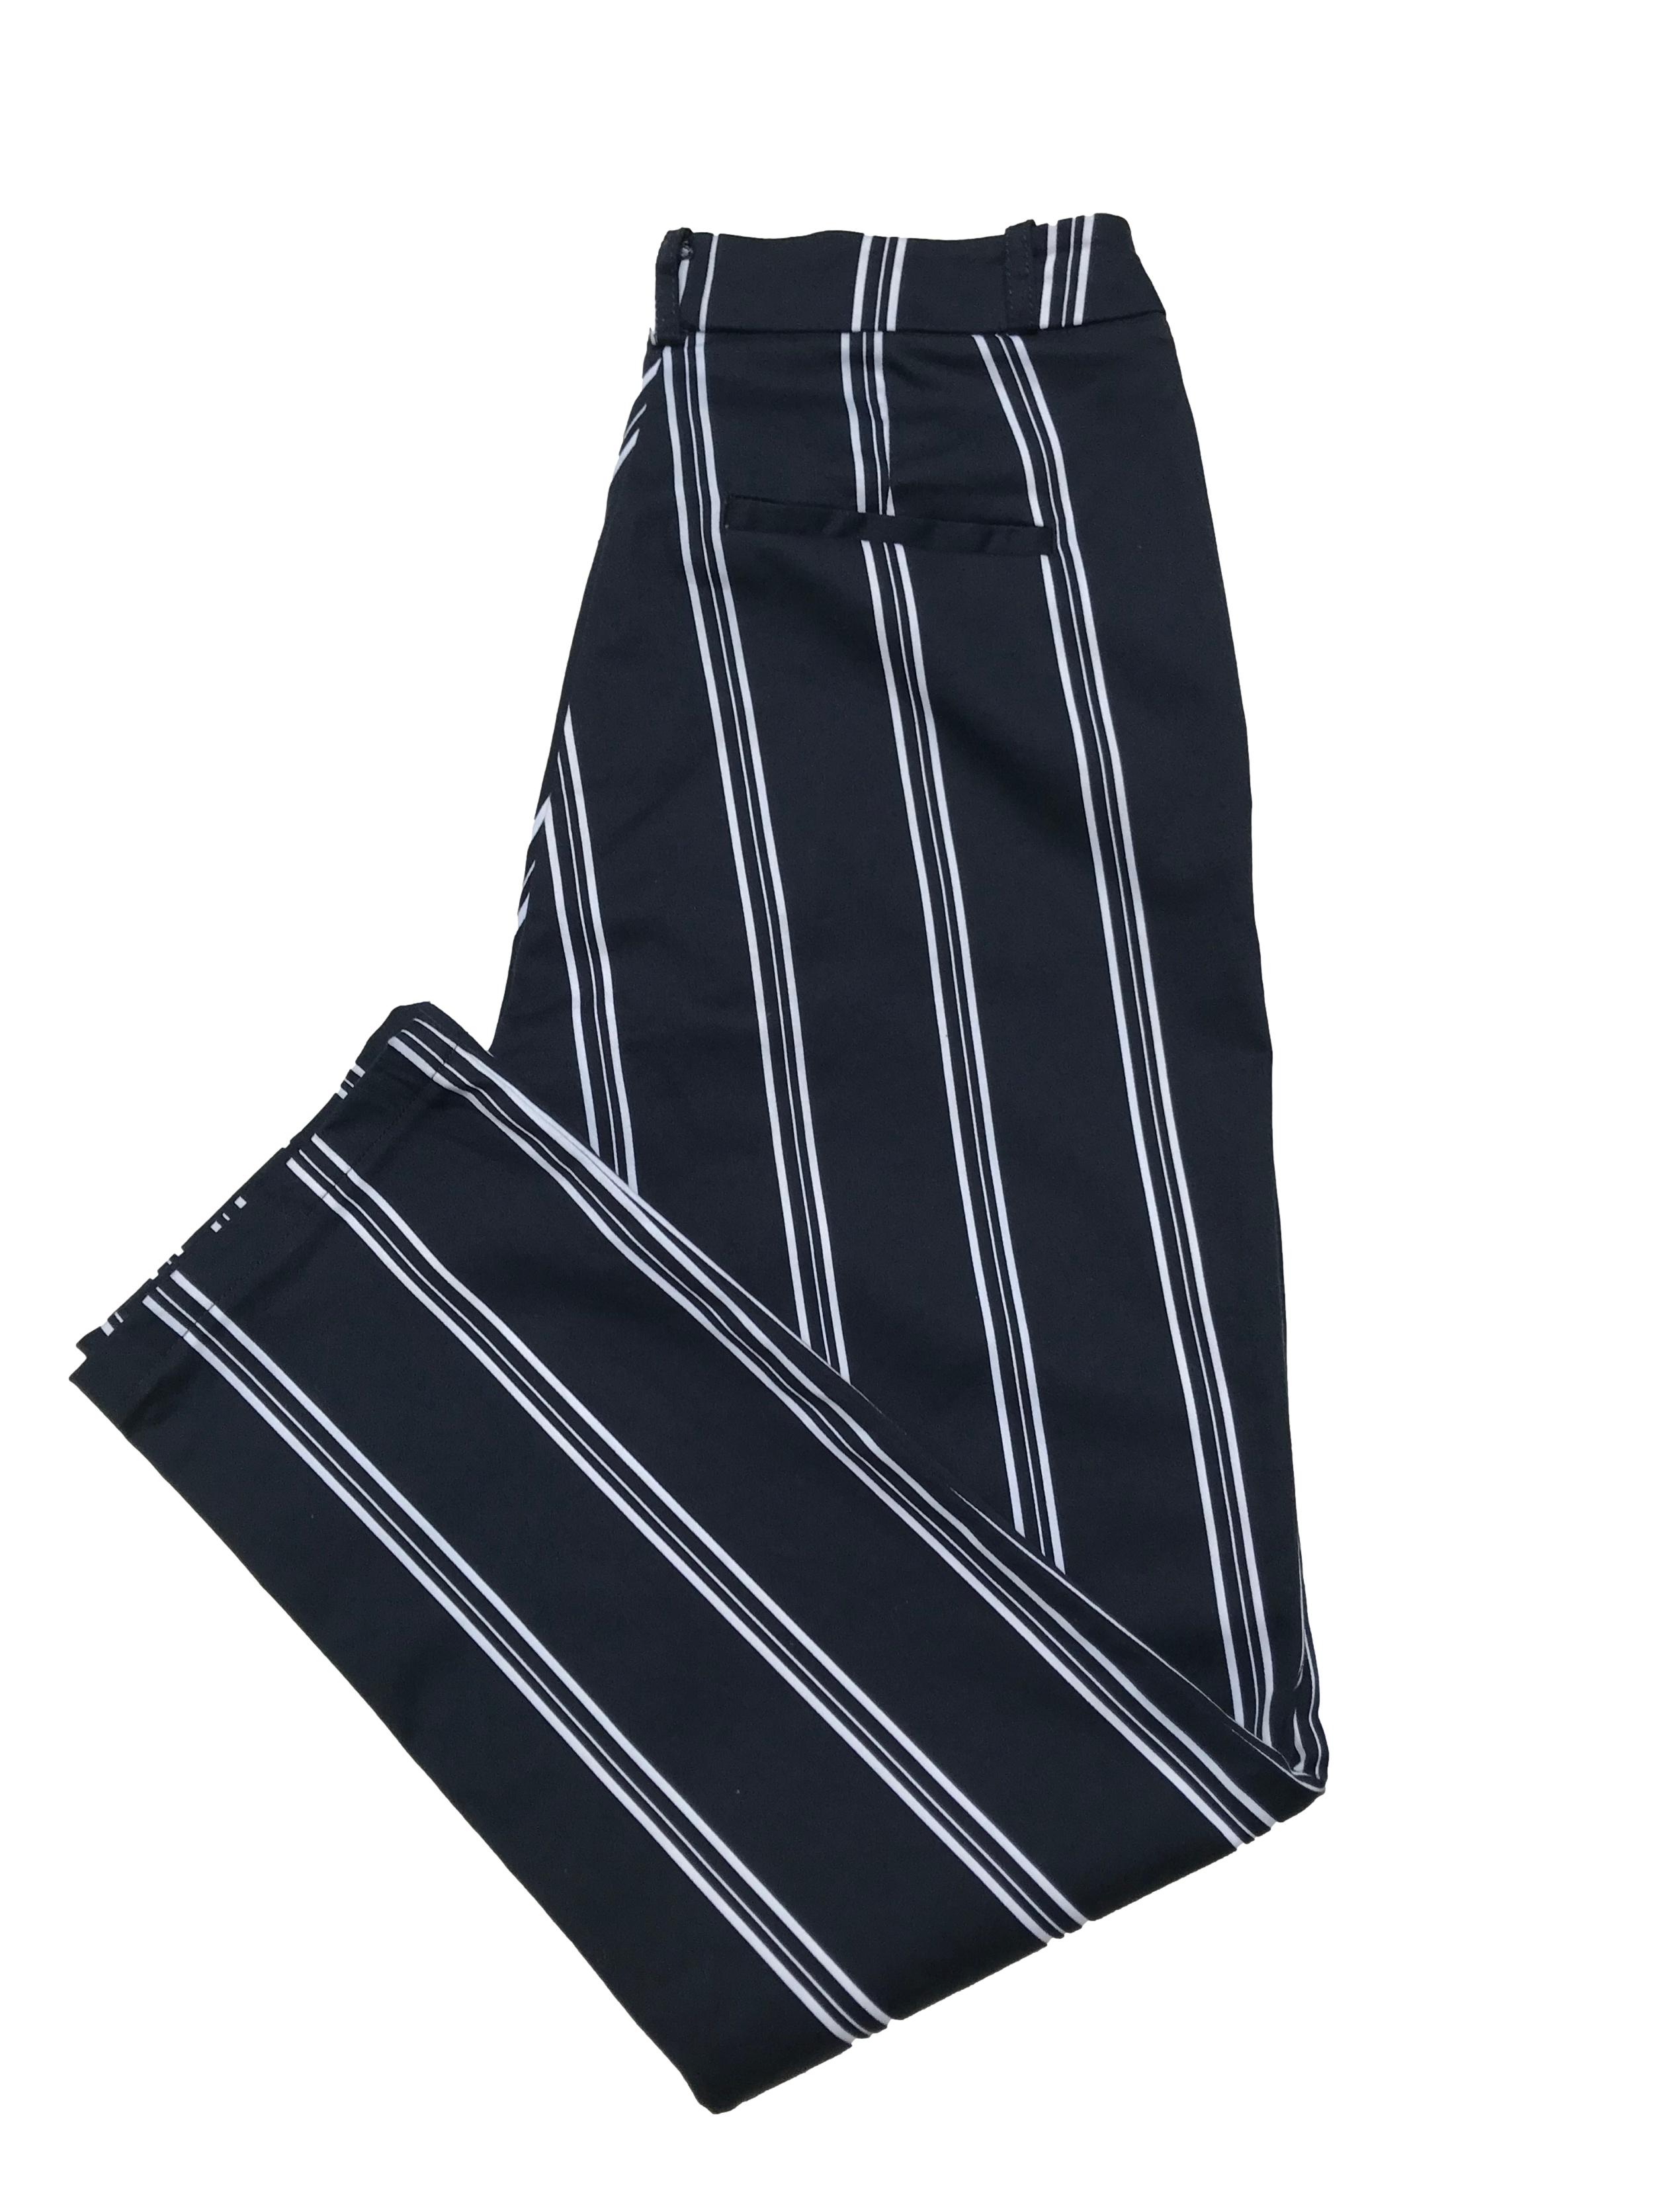 Pantalón azul con franjas blancas 98% algodón ligeramente stretch. Cintura 72cm Largo 90cm 